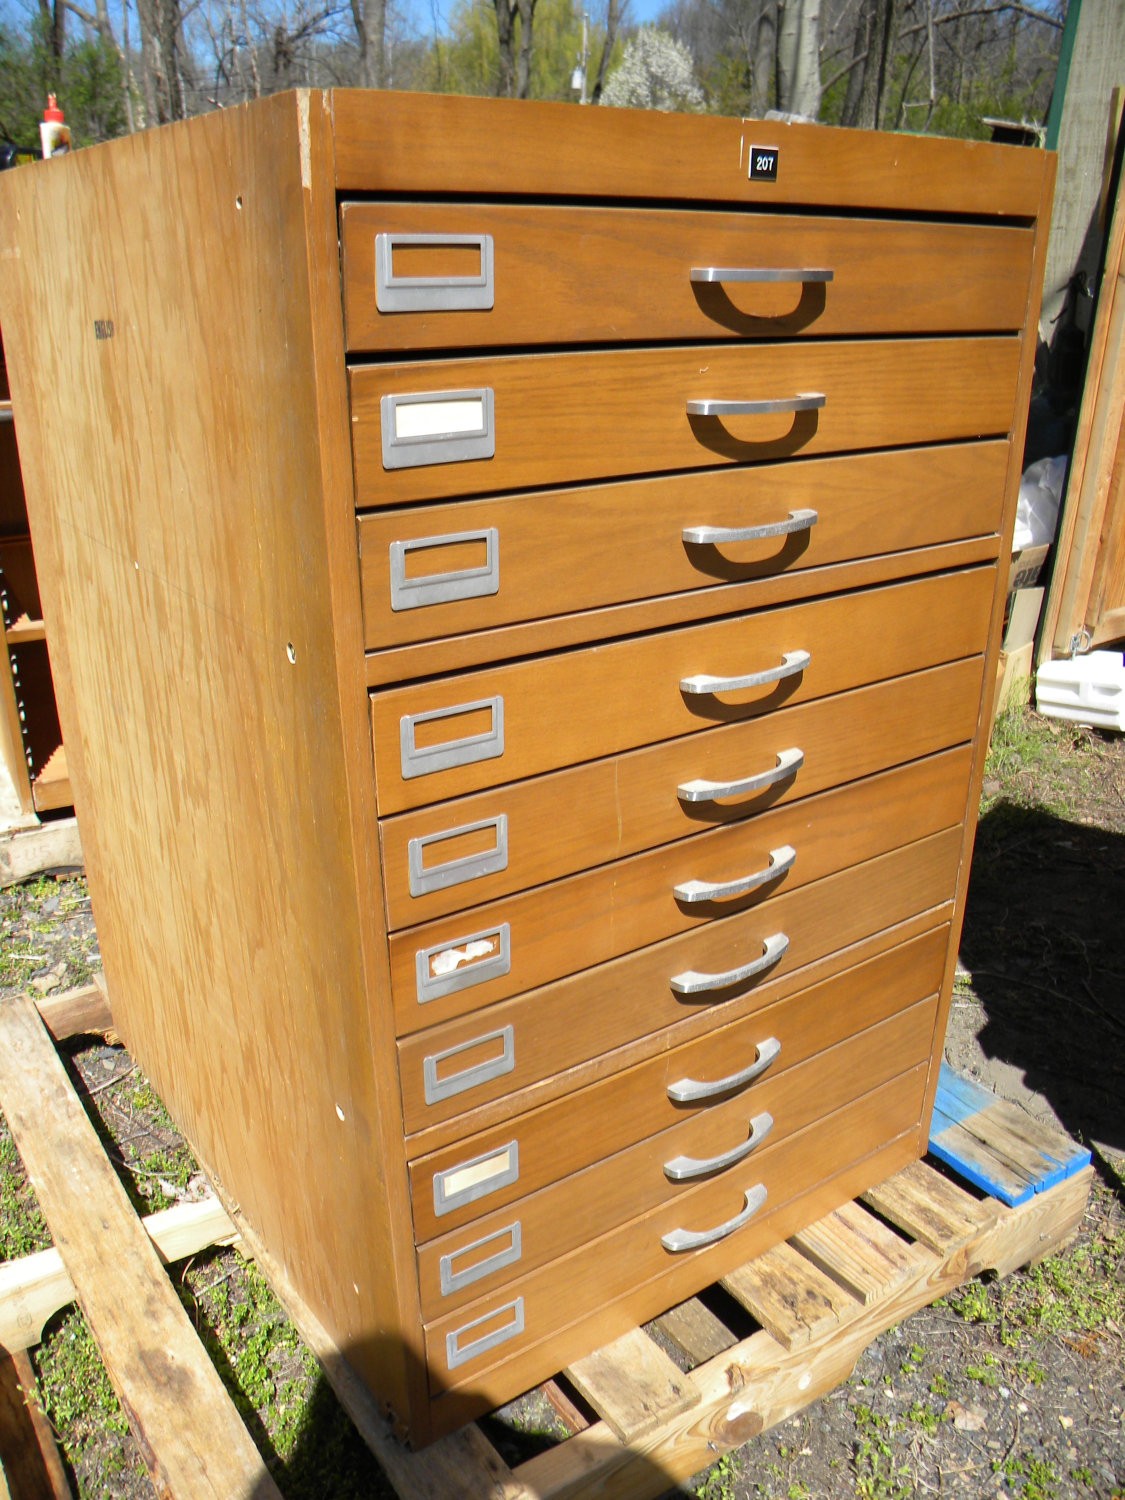 Nice vintage 70s 10 drawer wood storage cabinet perfect